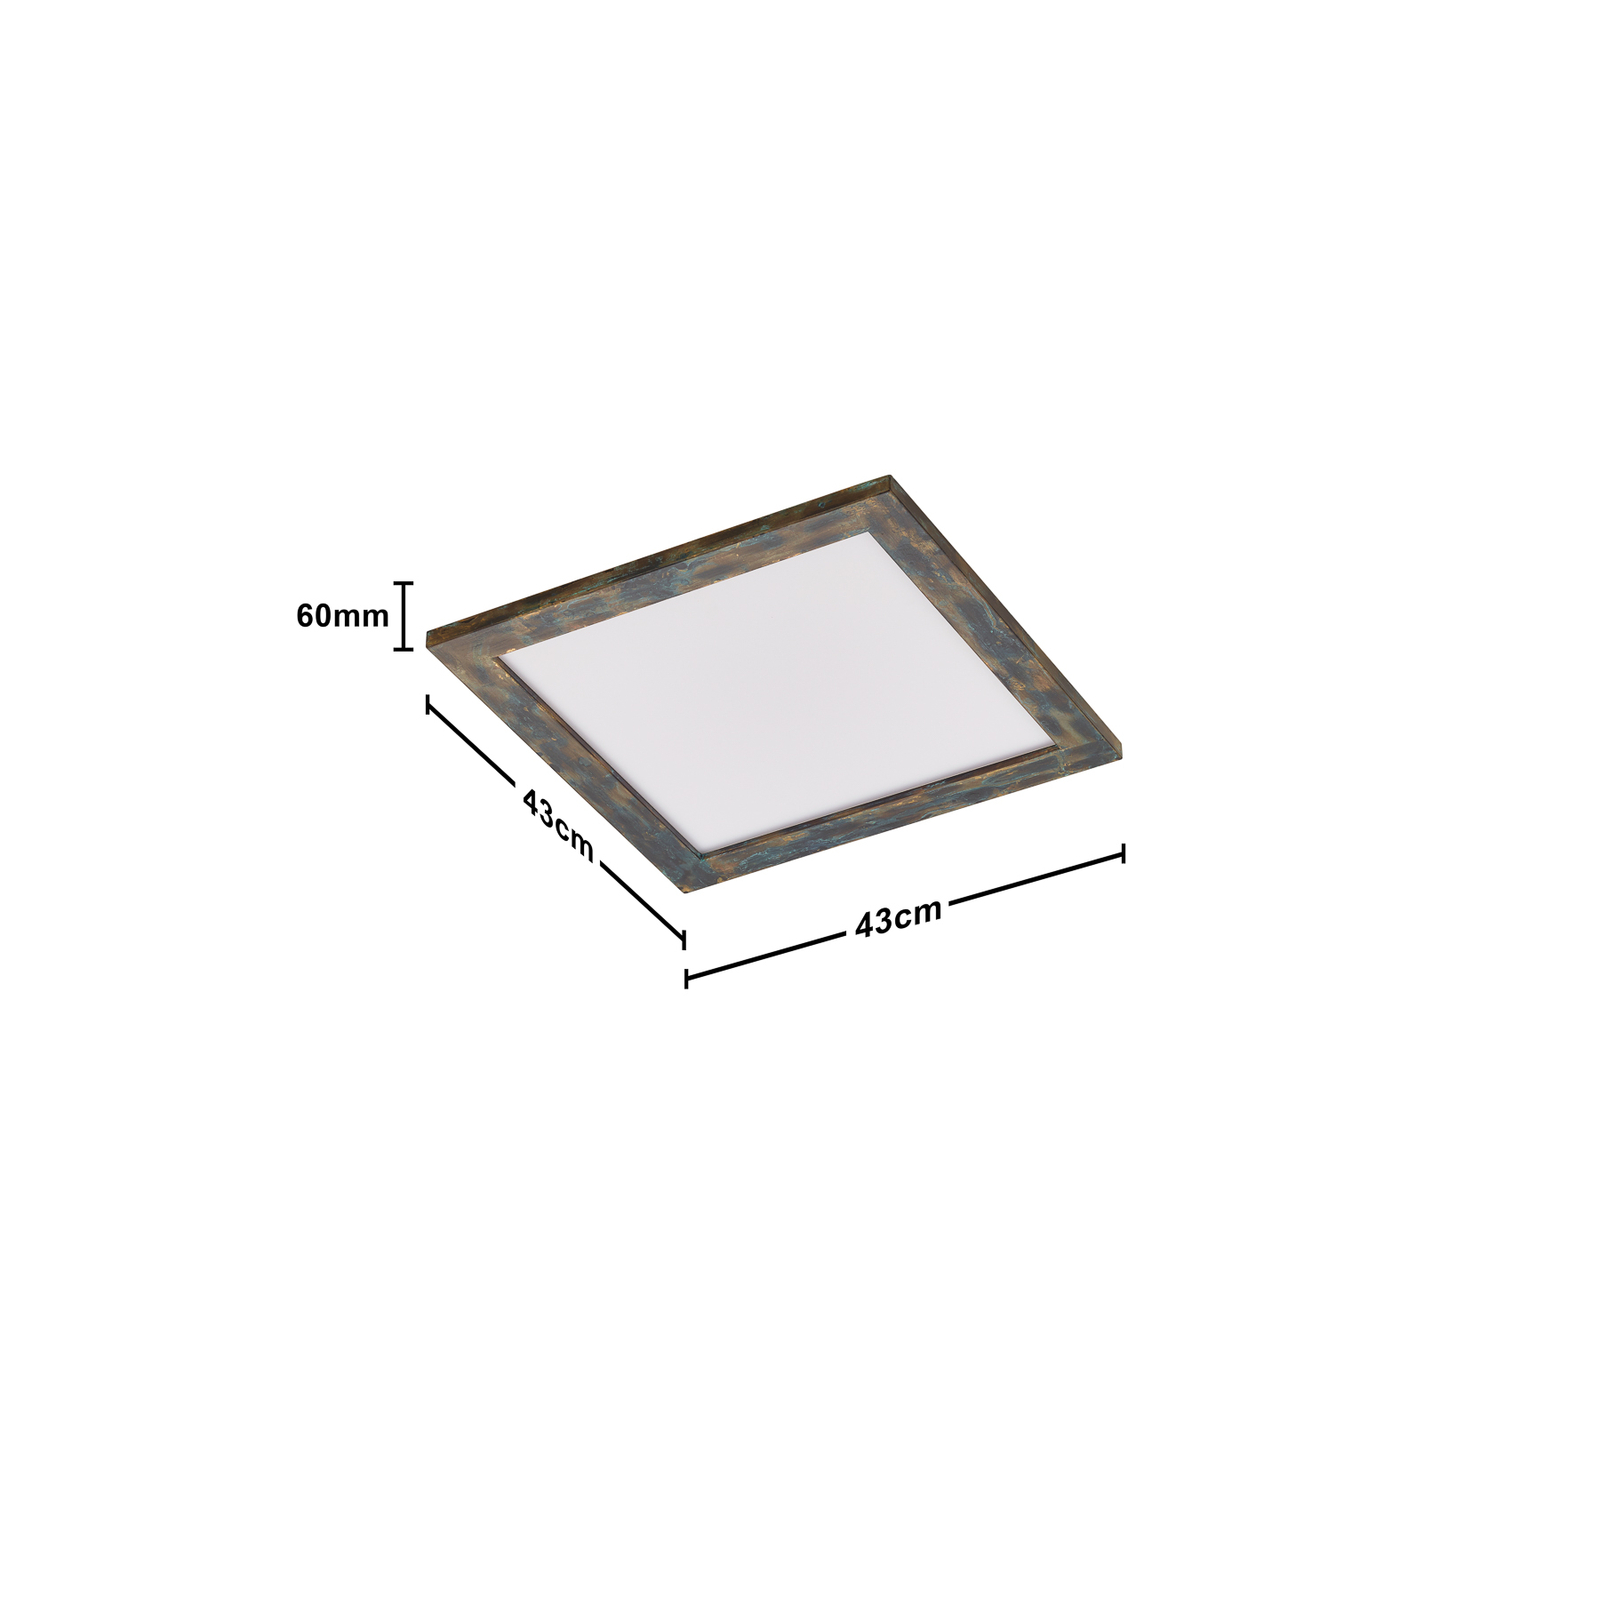 Quitani Aurinor LED panel, arany színű patinás, 45 cm